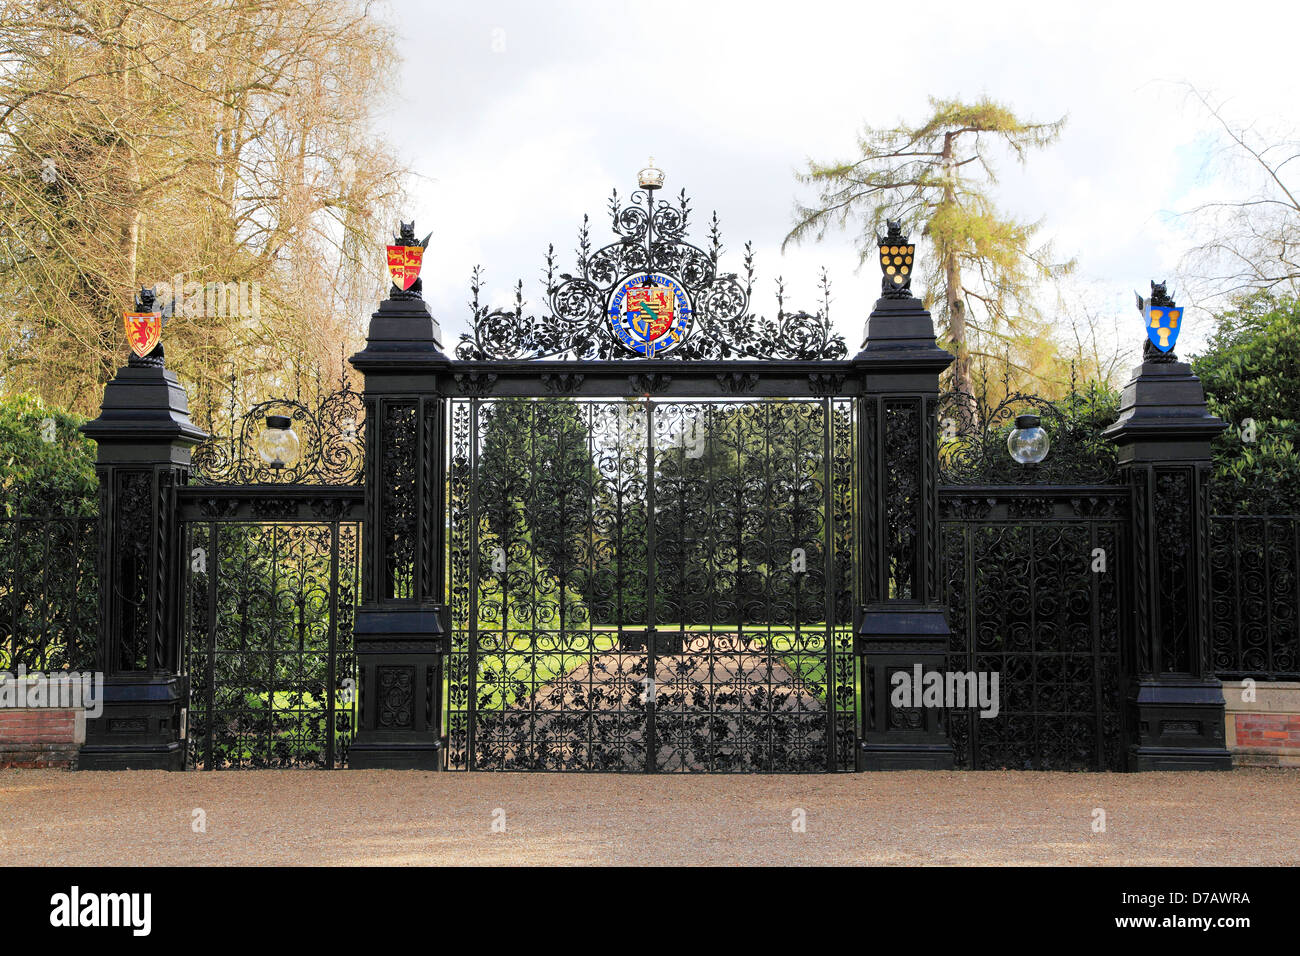 Norwich Gates, diseñado por Thomas Jekyll, Sandringham, Norfolk, Inglaterra Foto de stock